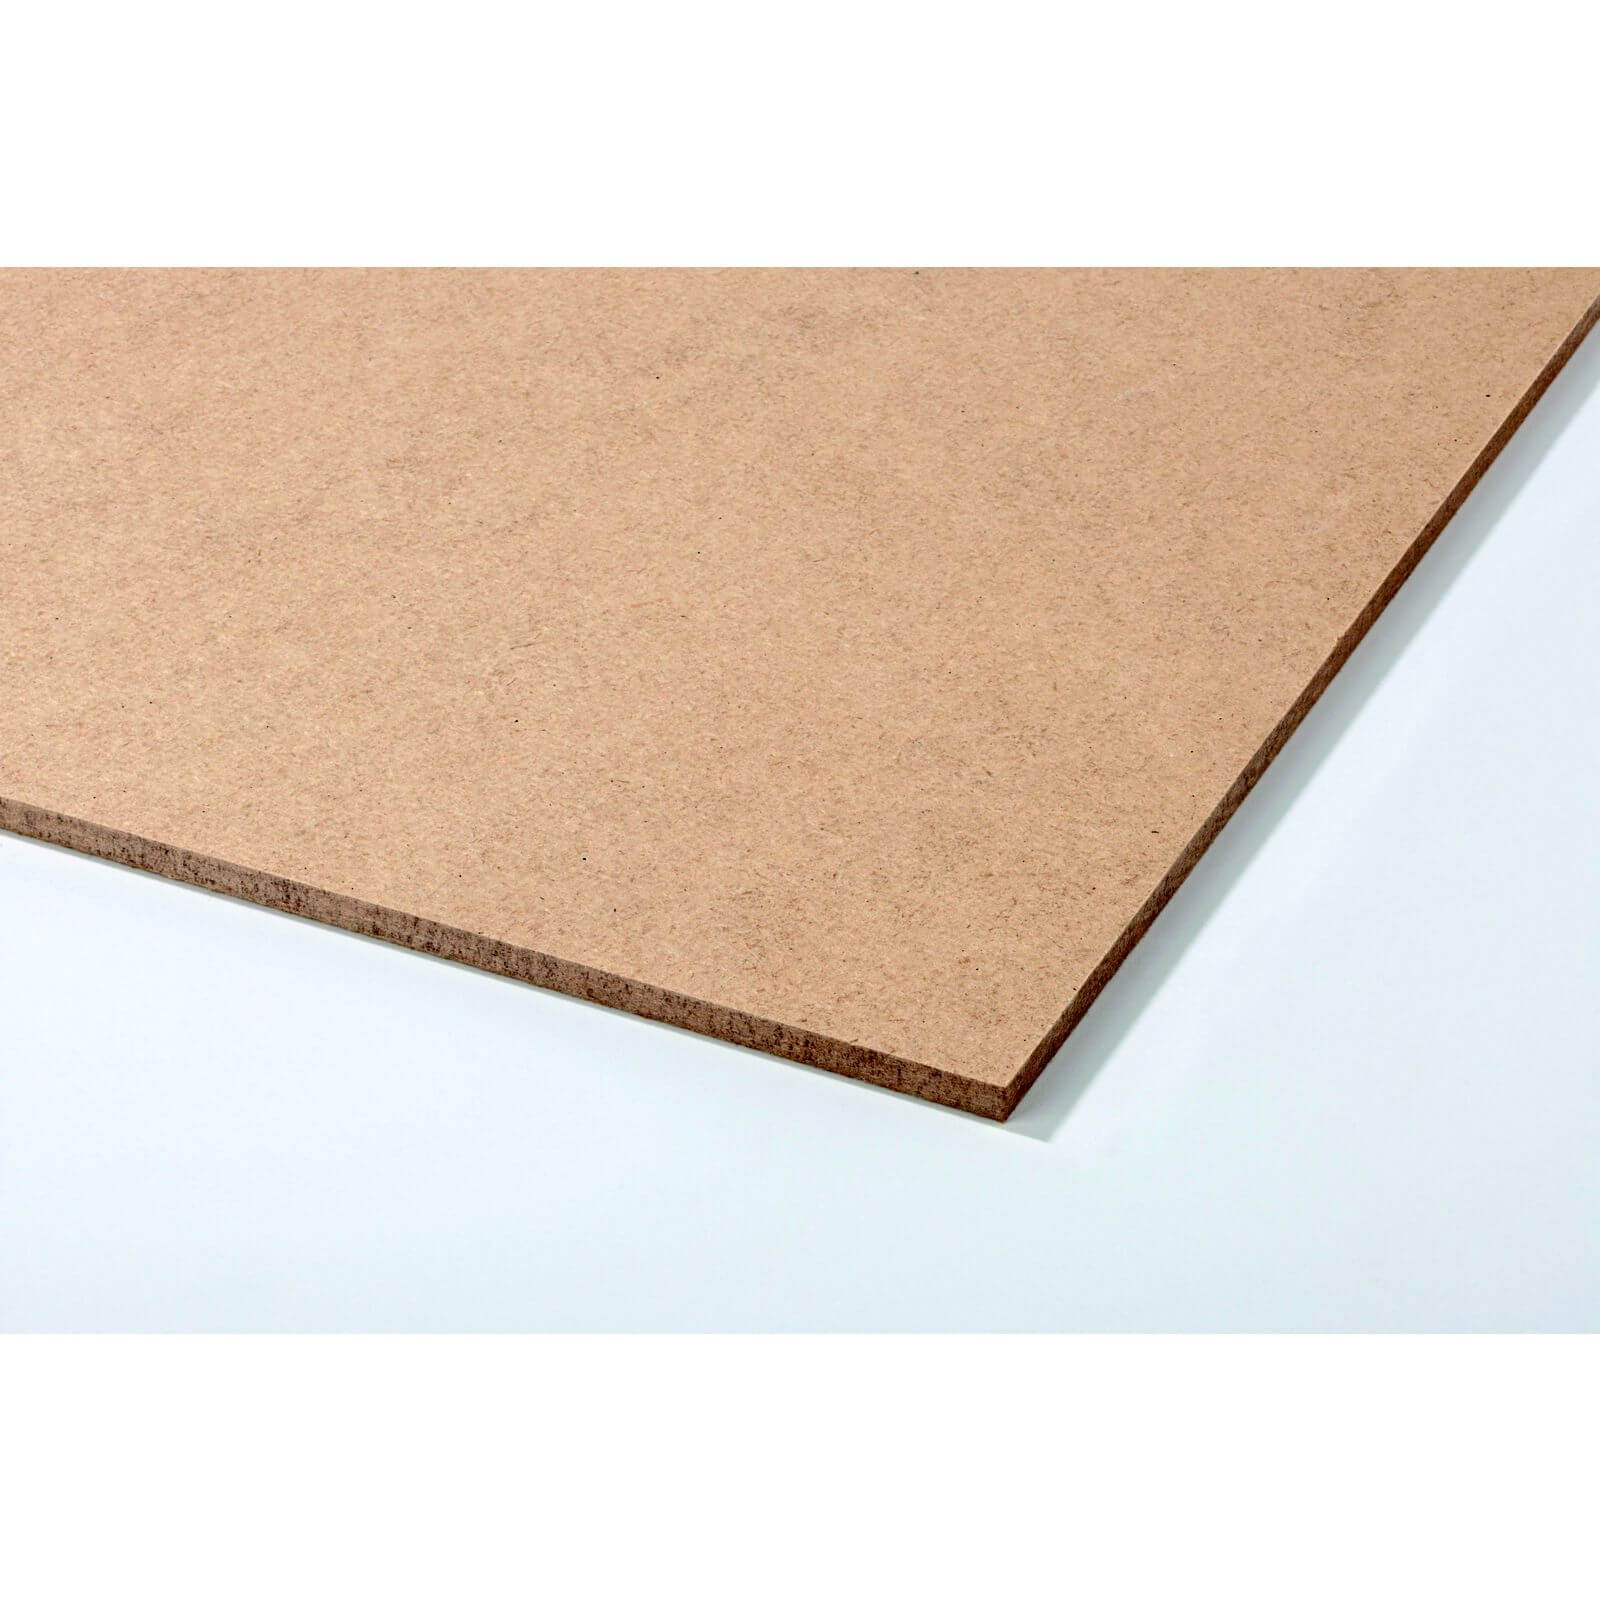 Metsa HDF Hardboard Sheet Board 2.4m (2440 x 1220 x 3mm)